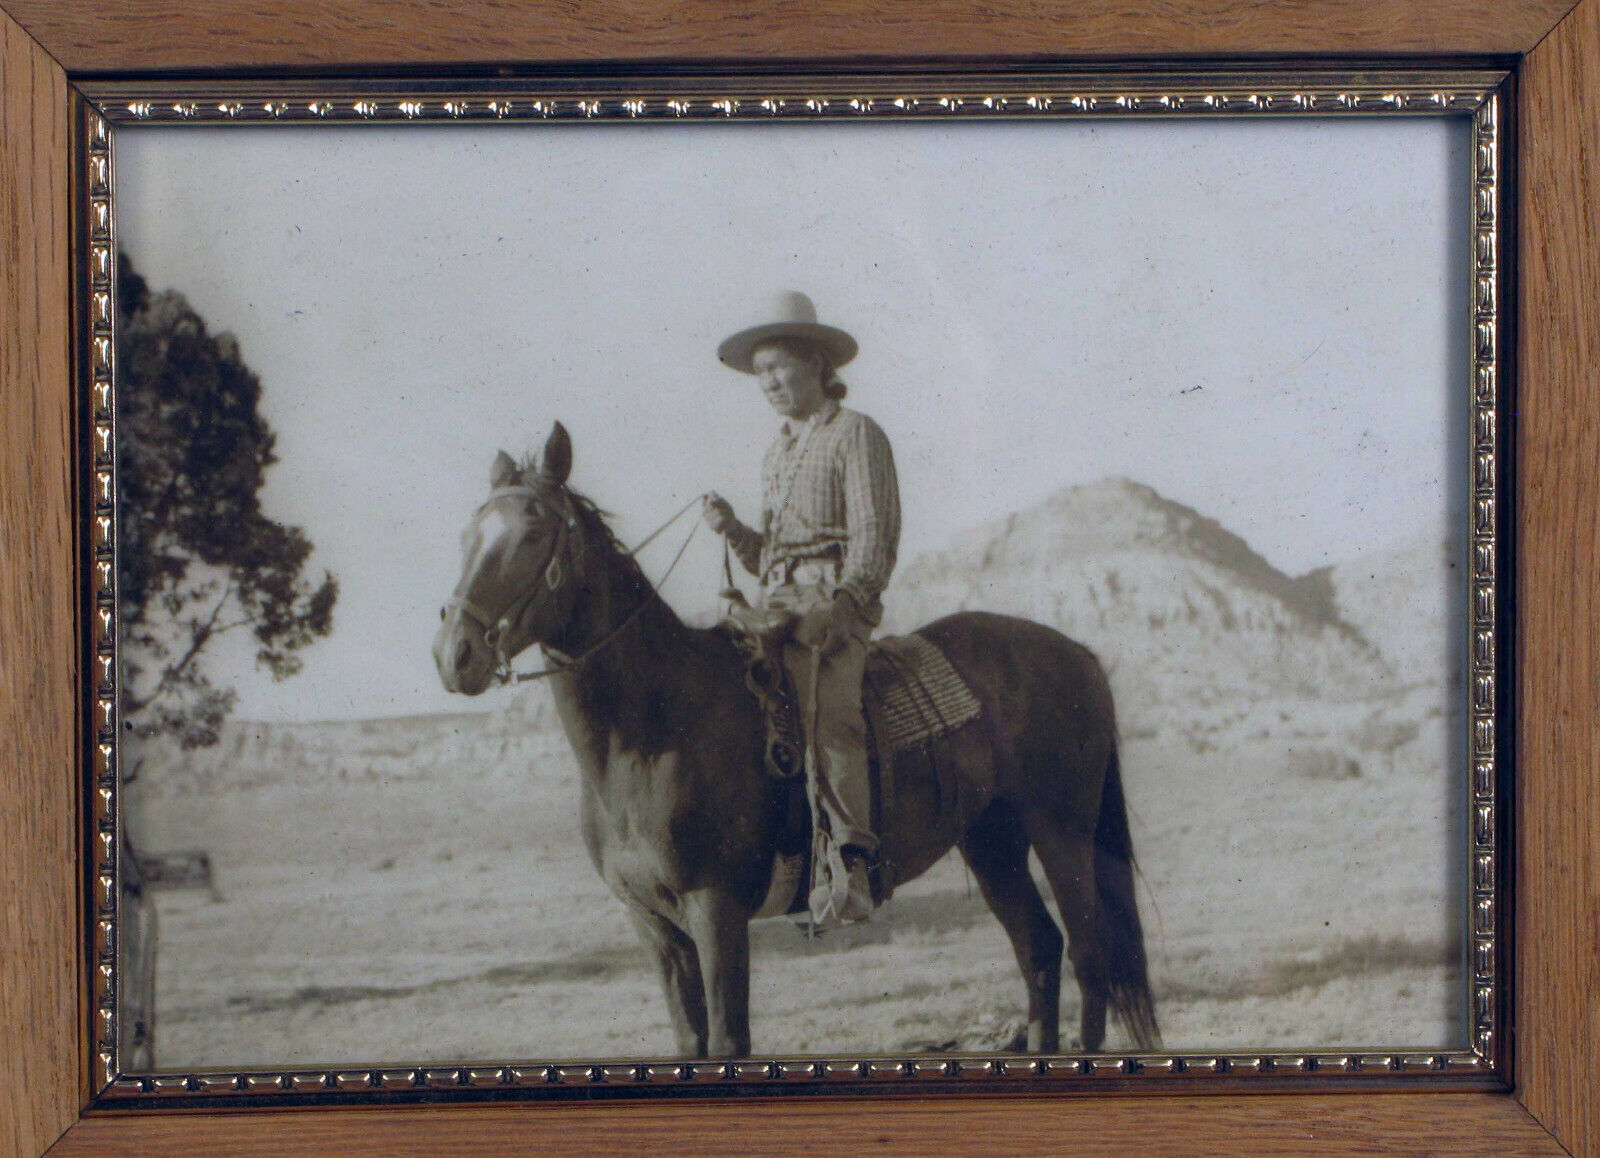 HARMON PERCY MARBLE VINTAGE PHOTOGRAPH NATIVE AMERICAN RIDING A HORSE RARE 